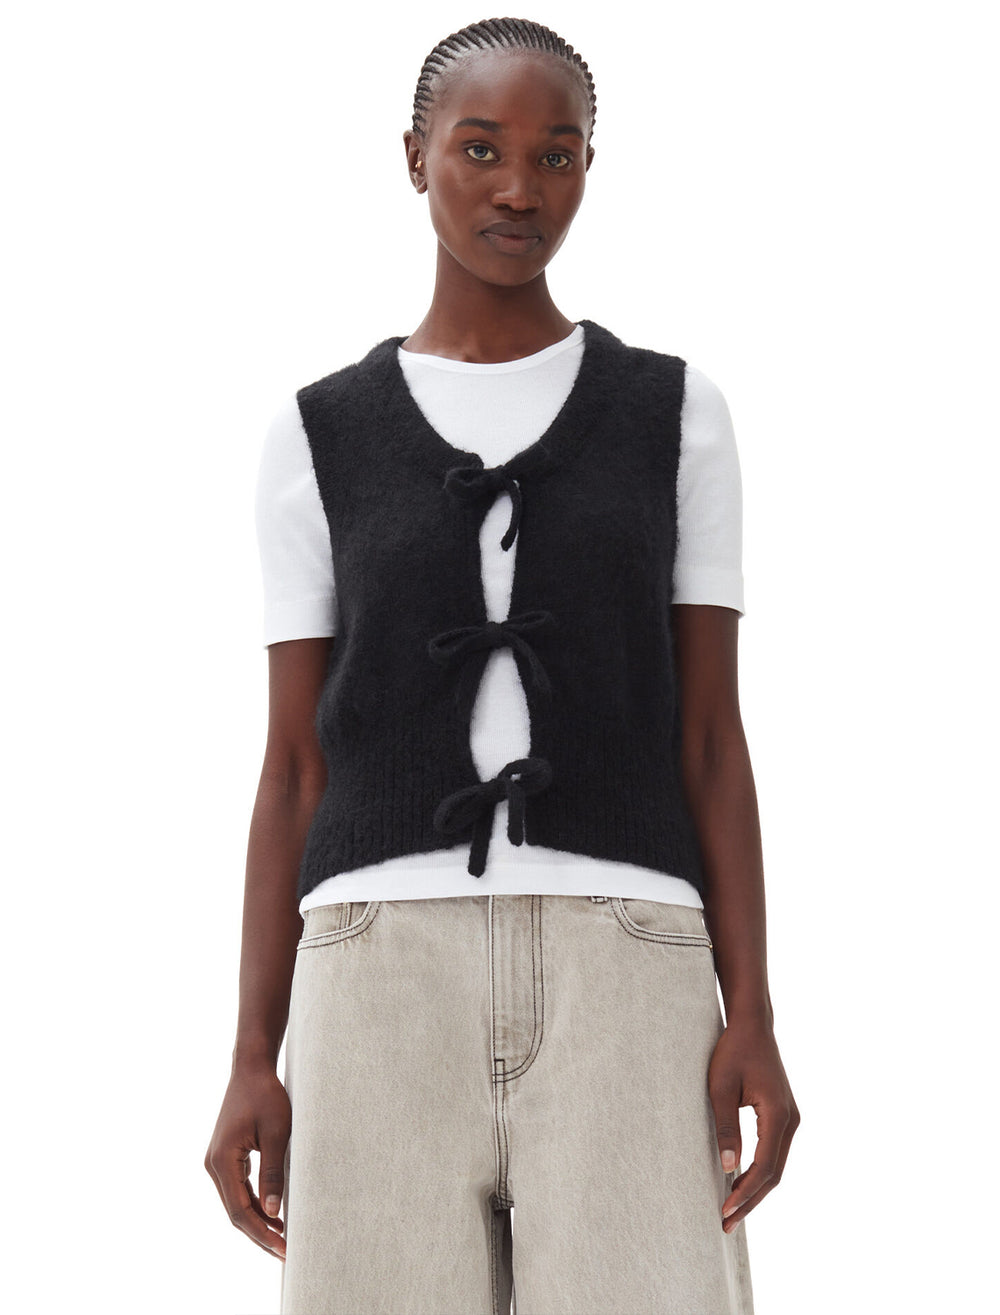 Model wearing Ganni's tie string vest in black.